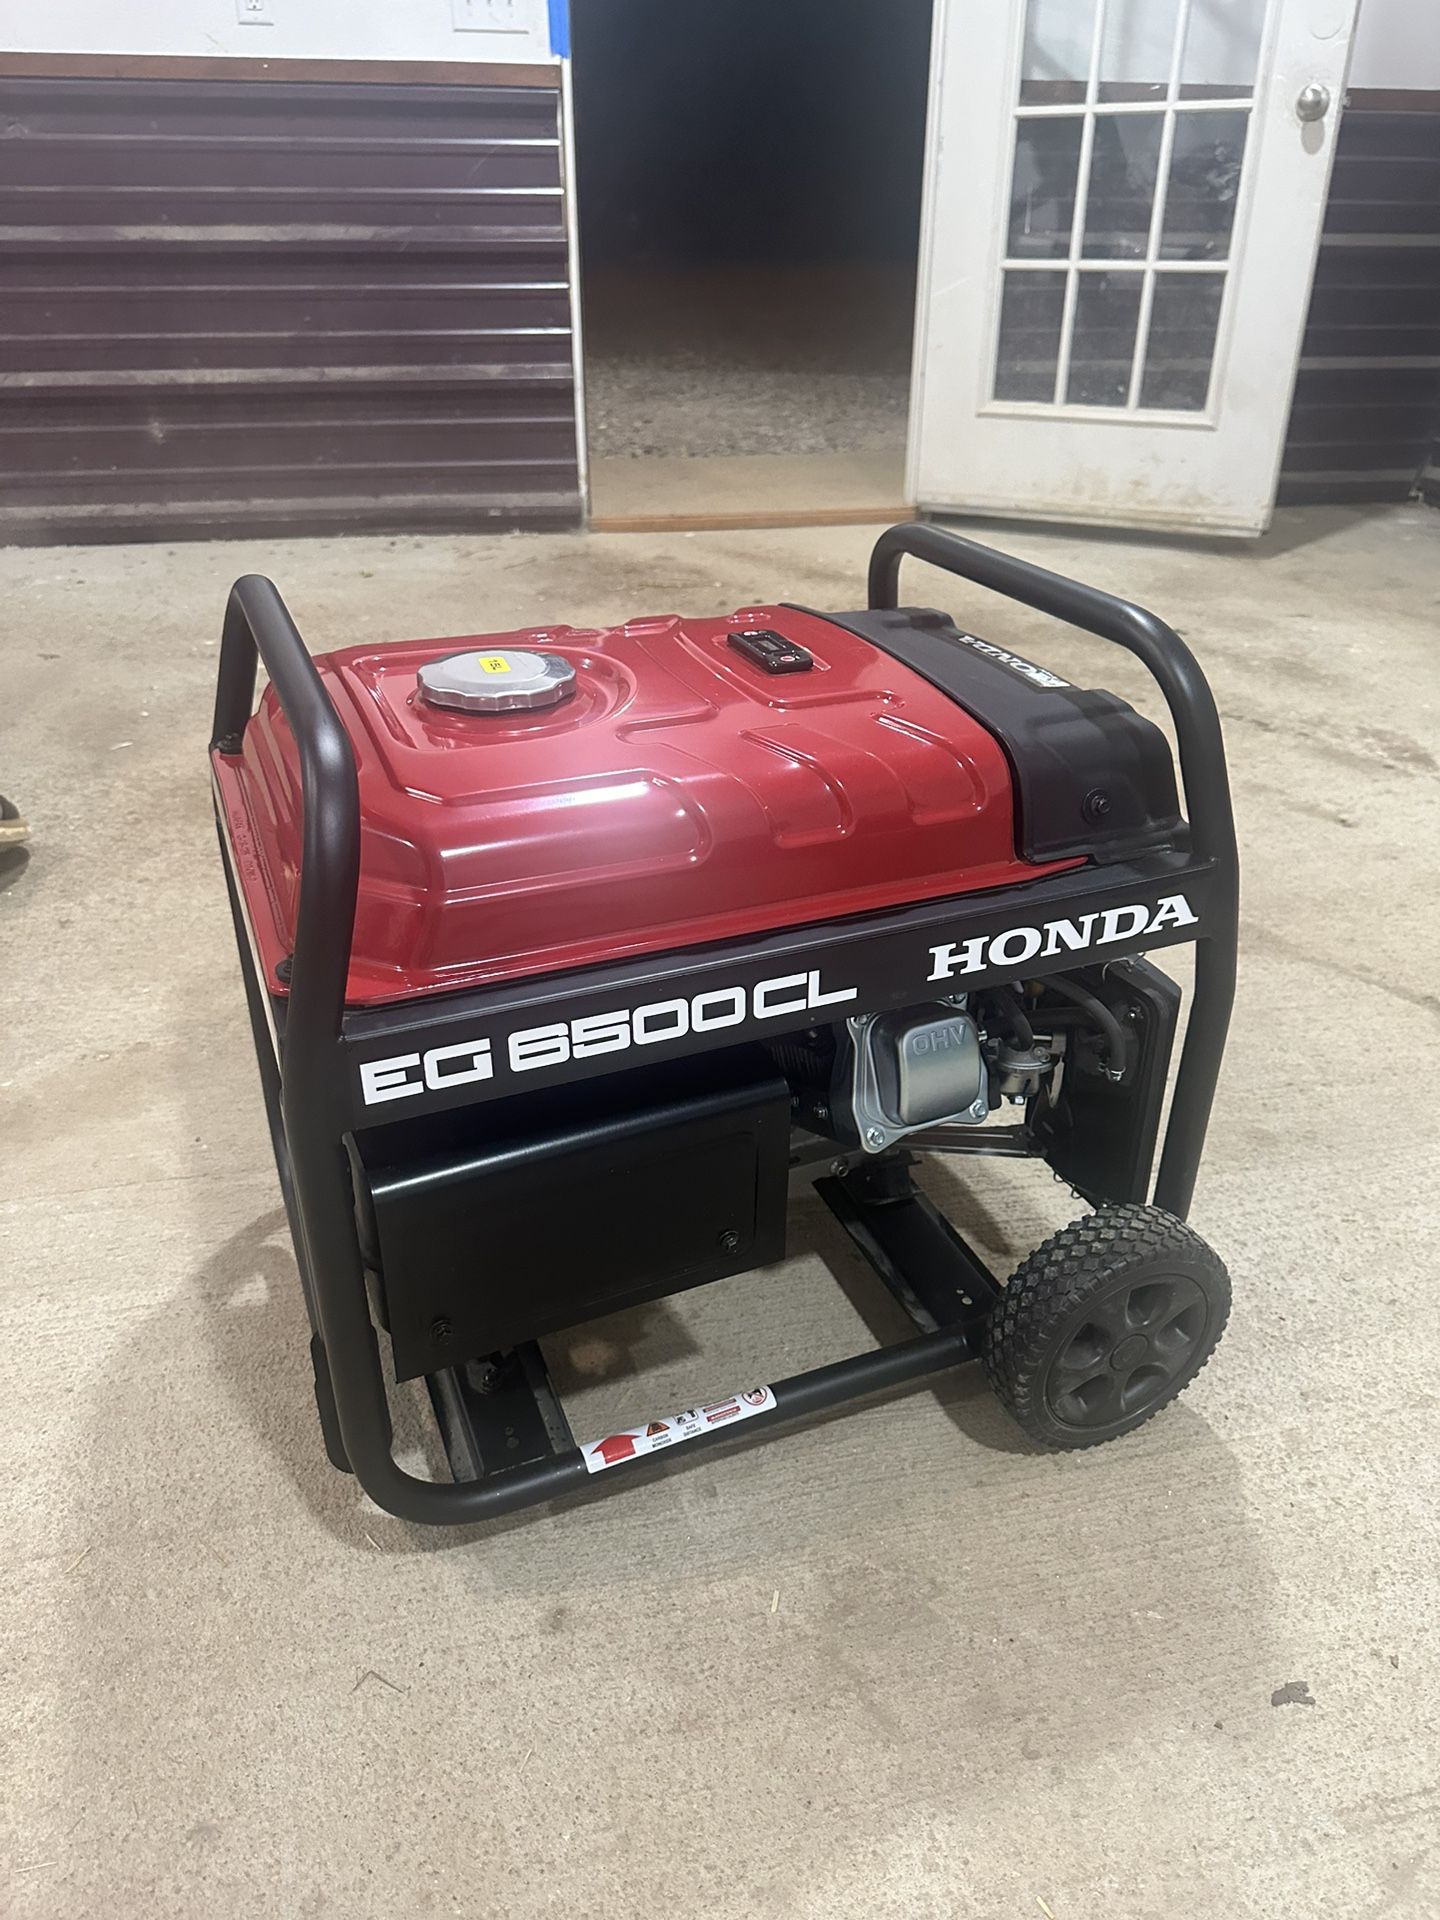 Honda EG6500CL Gas Powered Generator